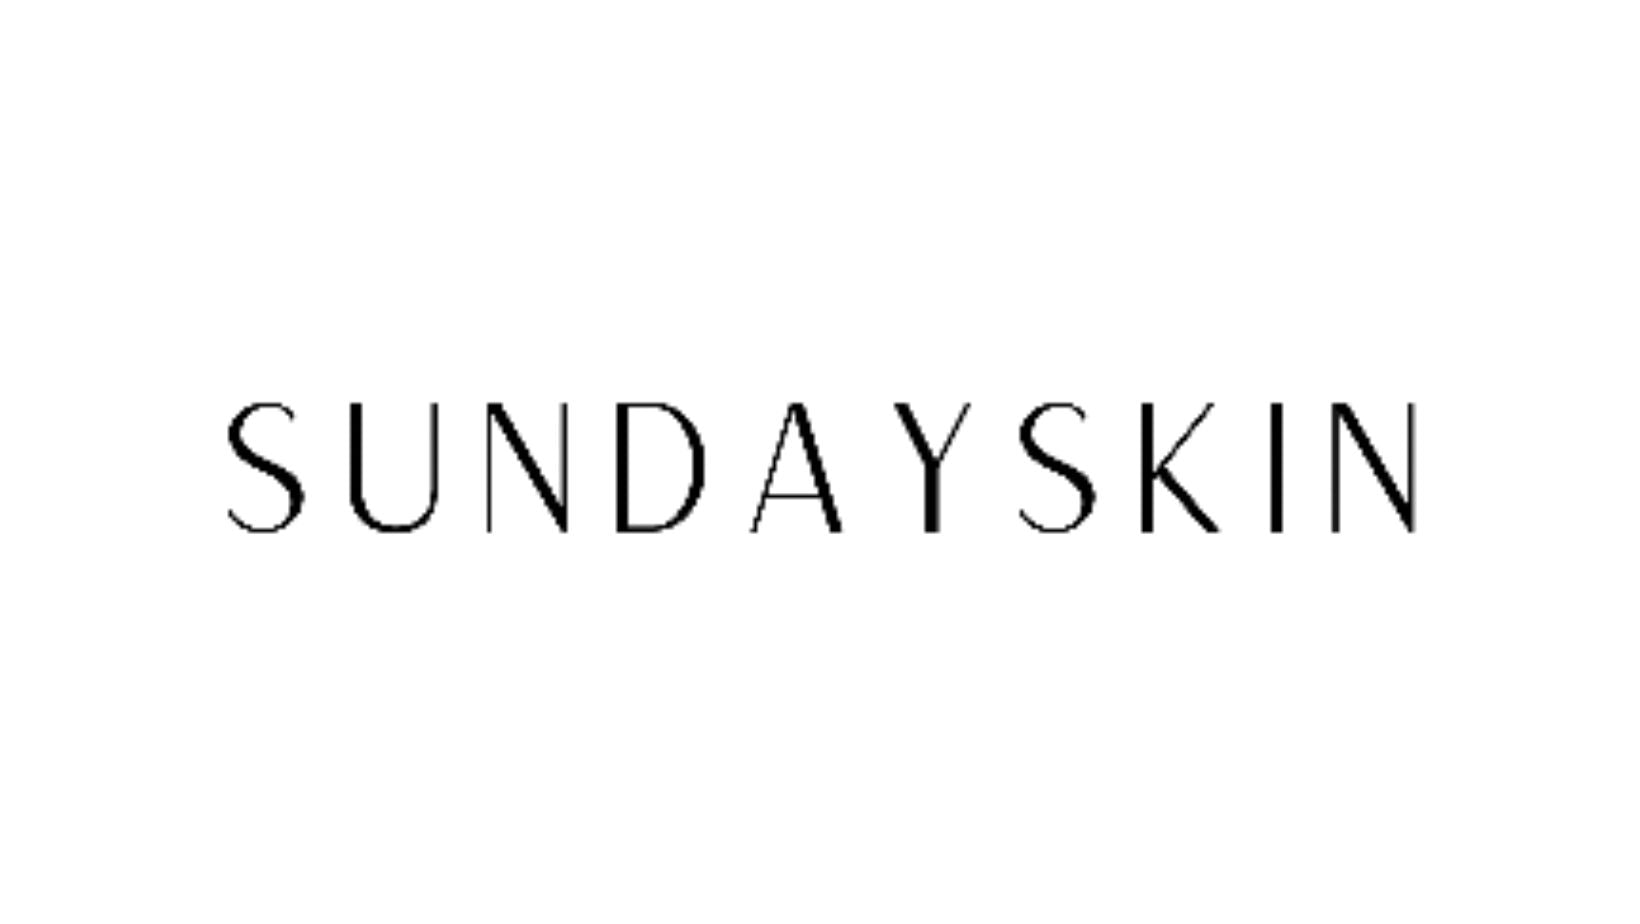 Sunday Skin